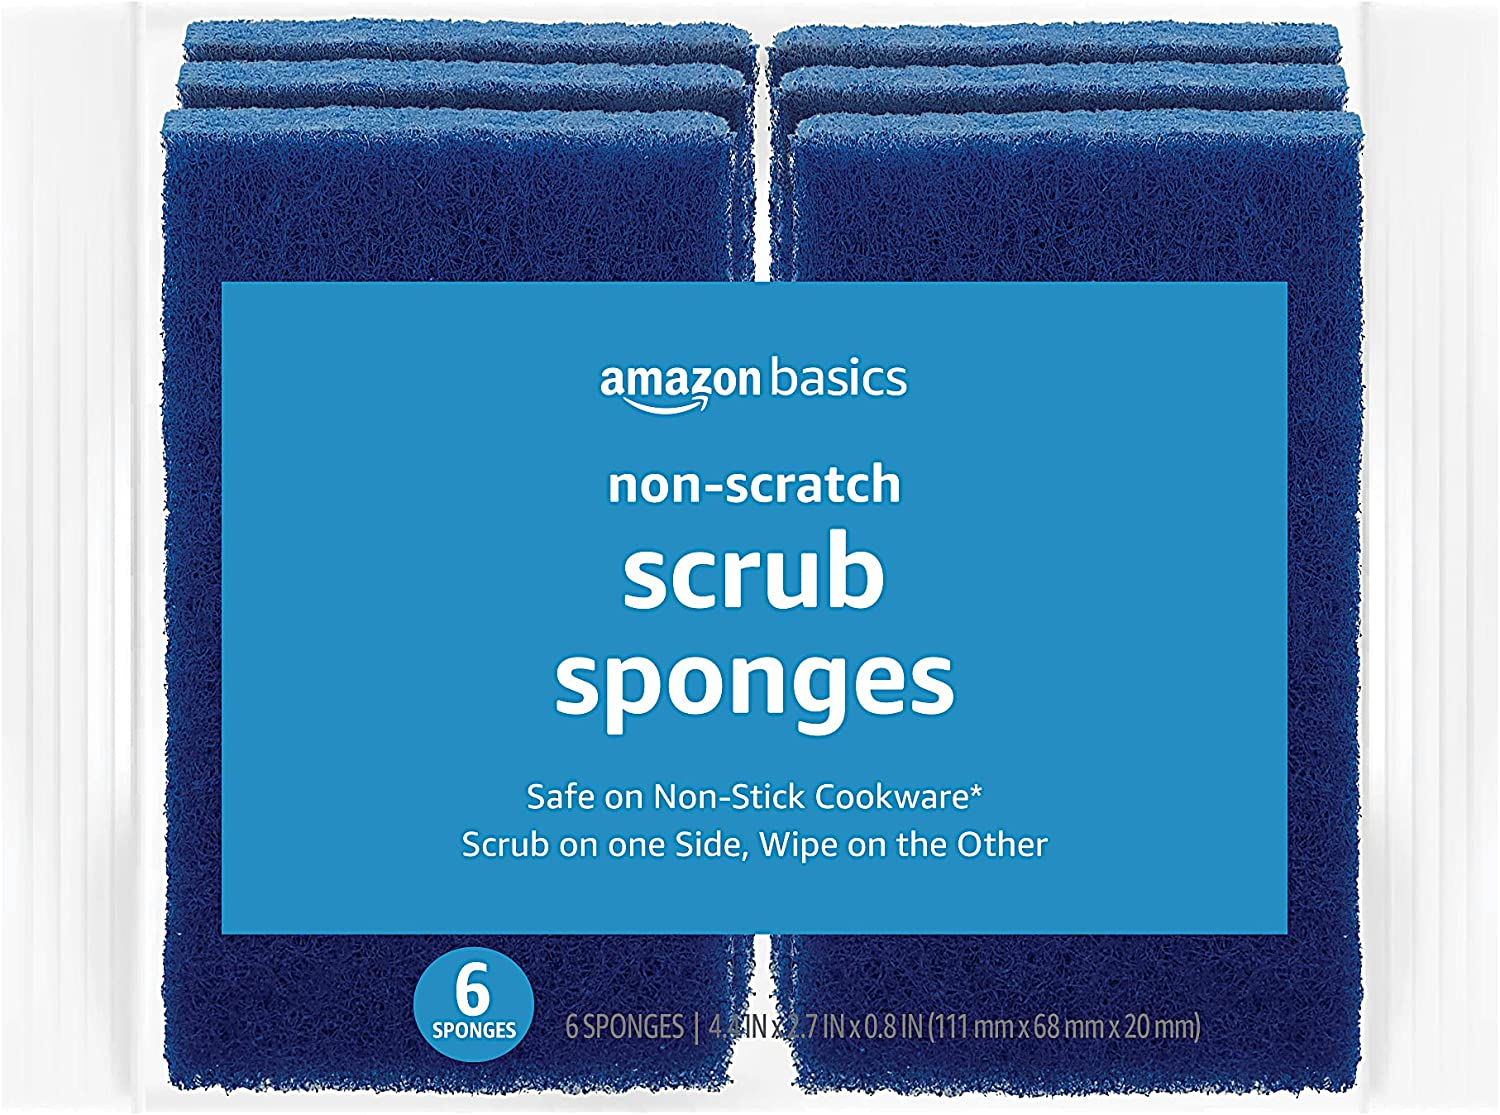 6-Pk Amazon Basics Non-Scratch Sponges $3.65